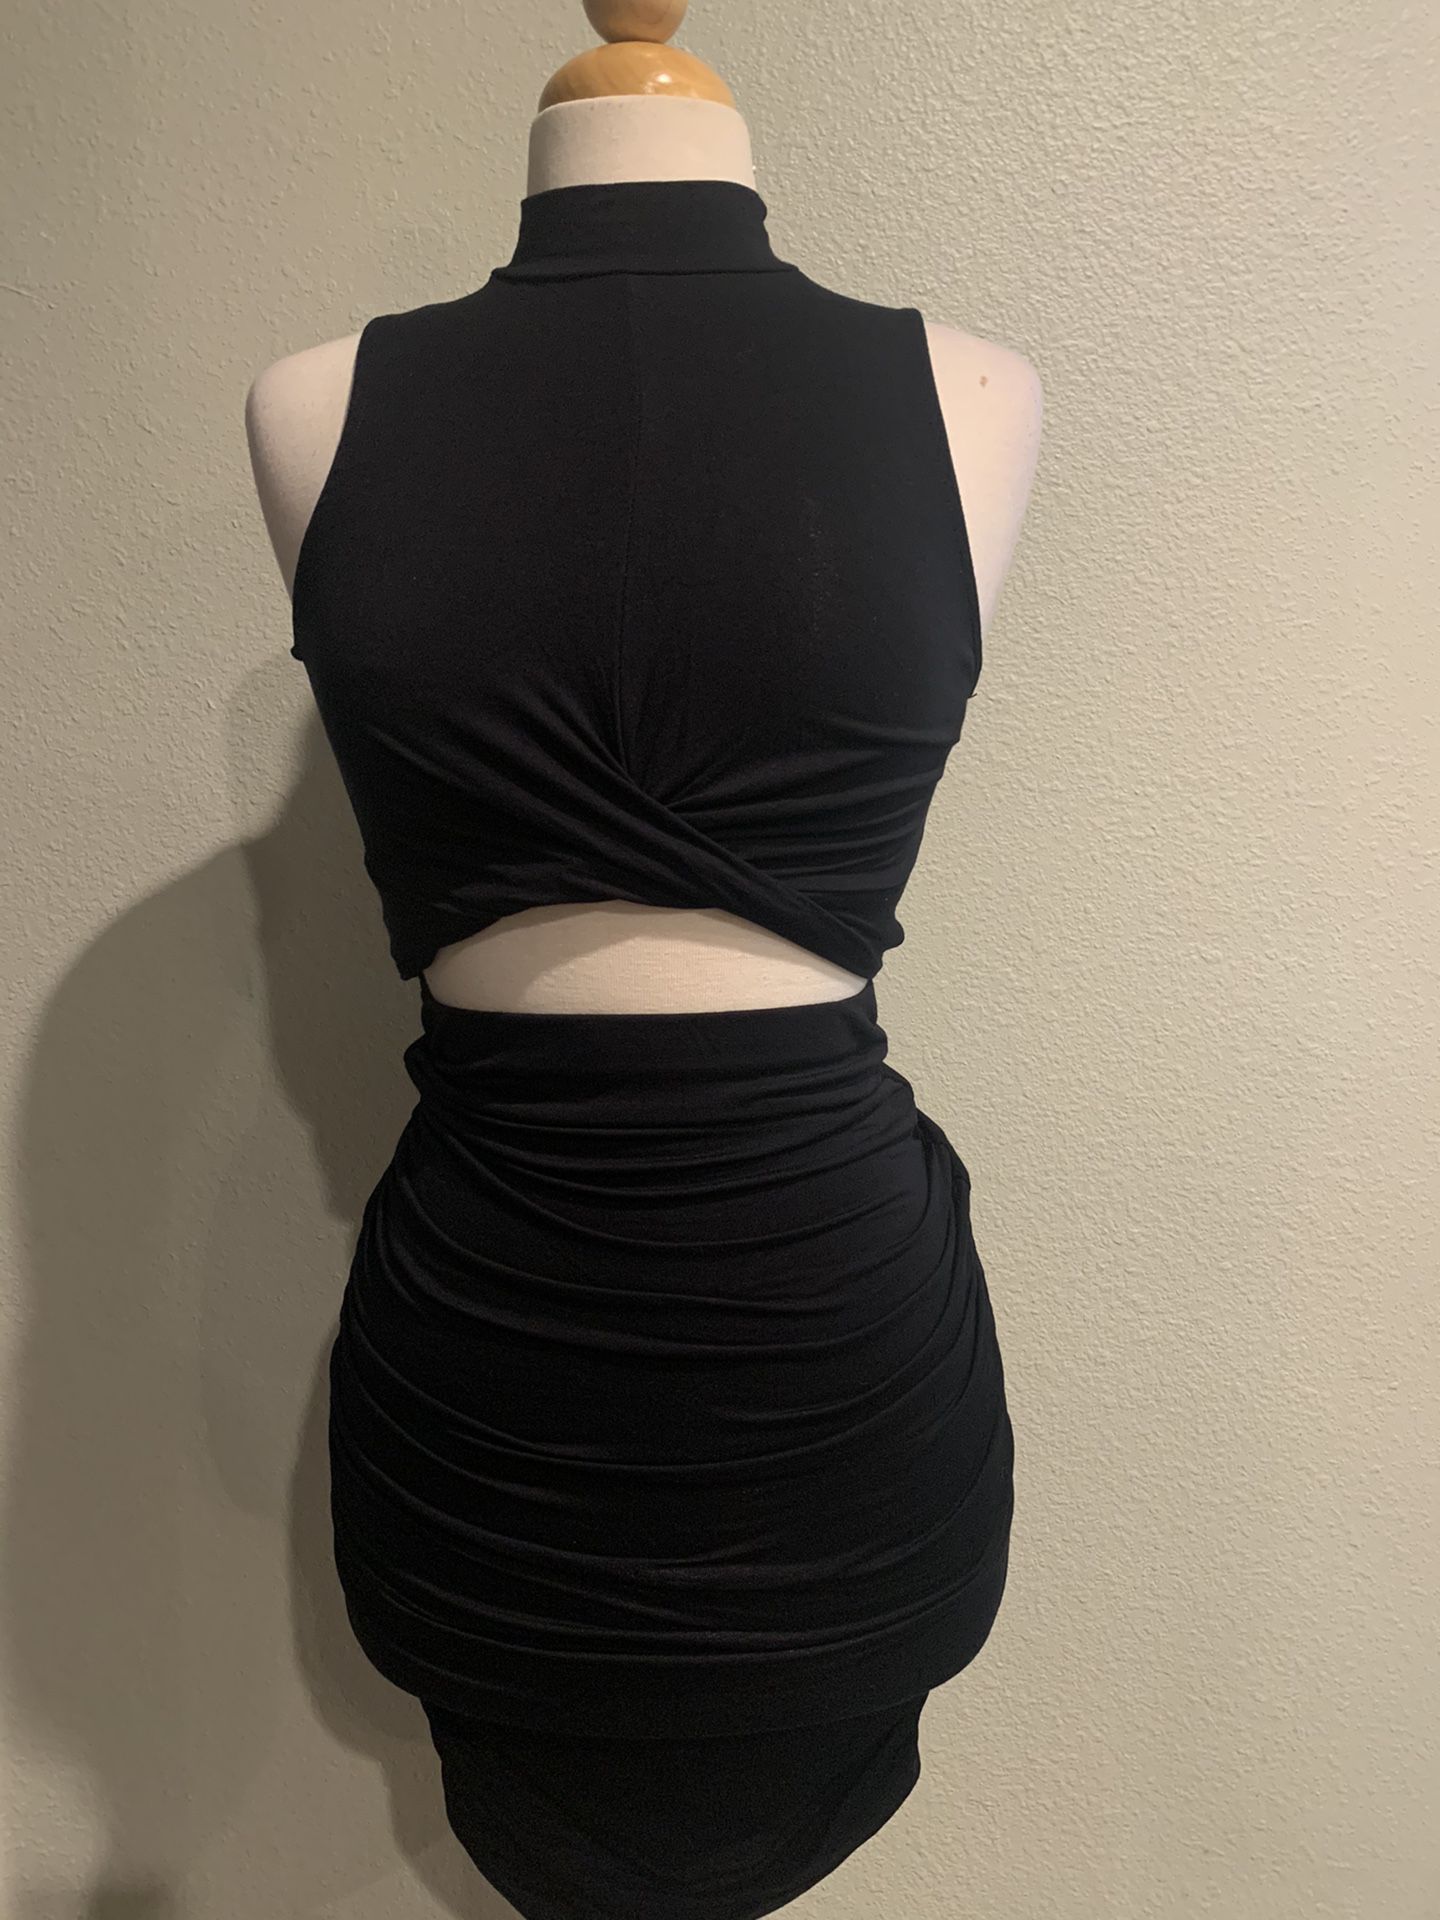 Fashion Nova Dress size Small